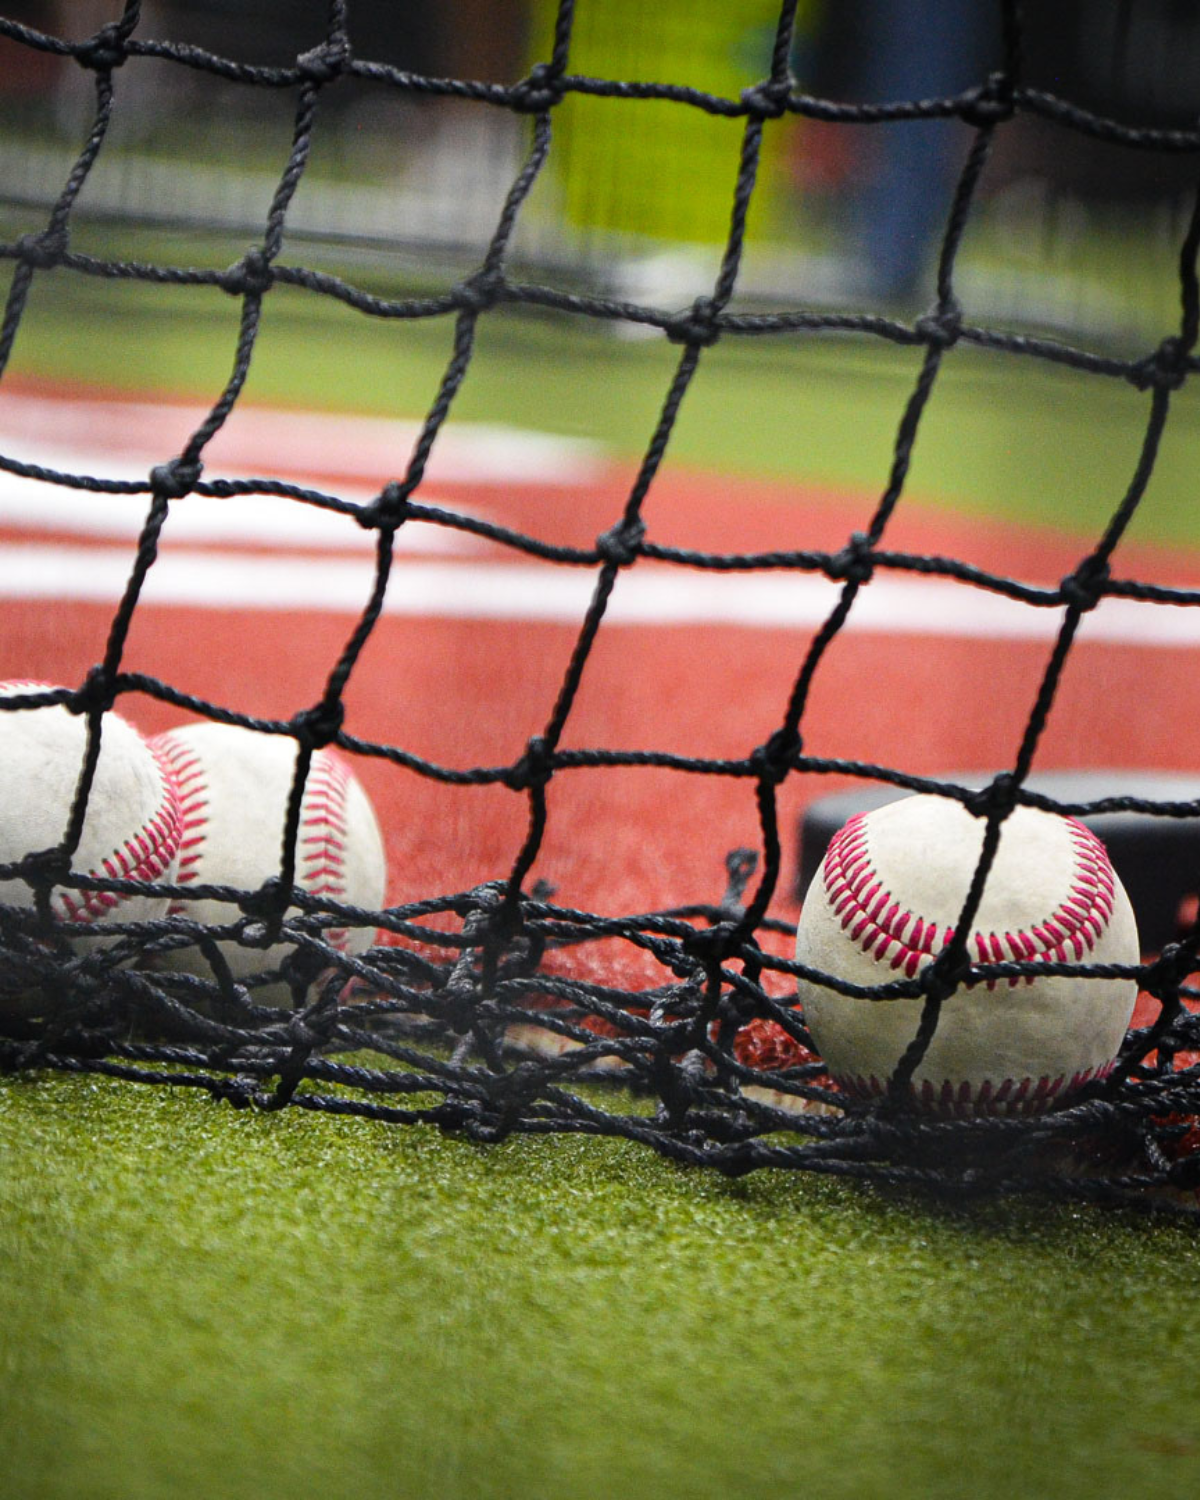 baseballs on ground in rental batting cages at arena lake norman